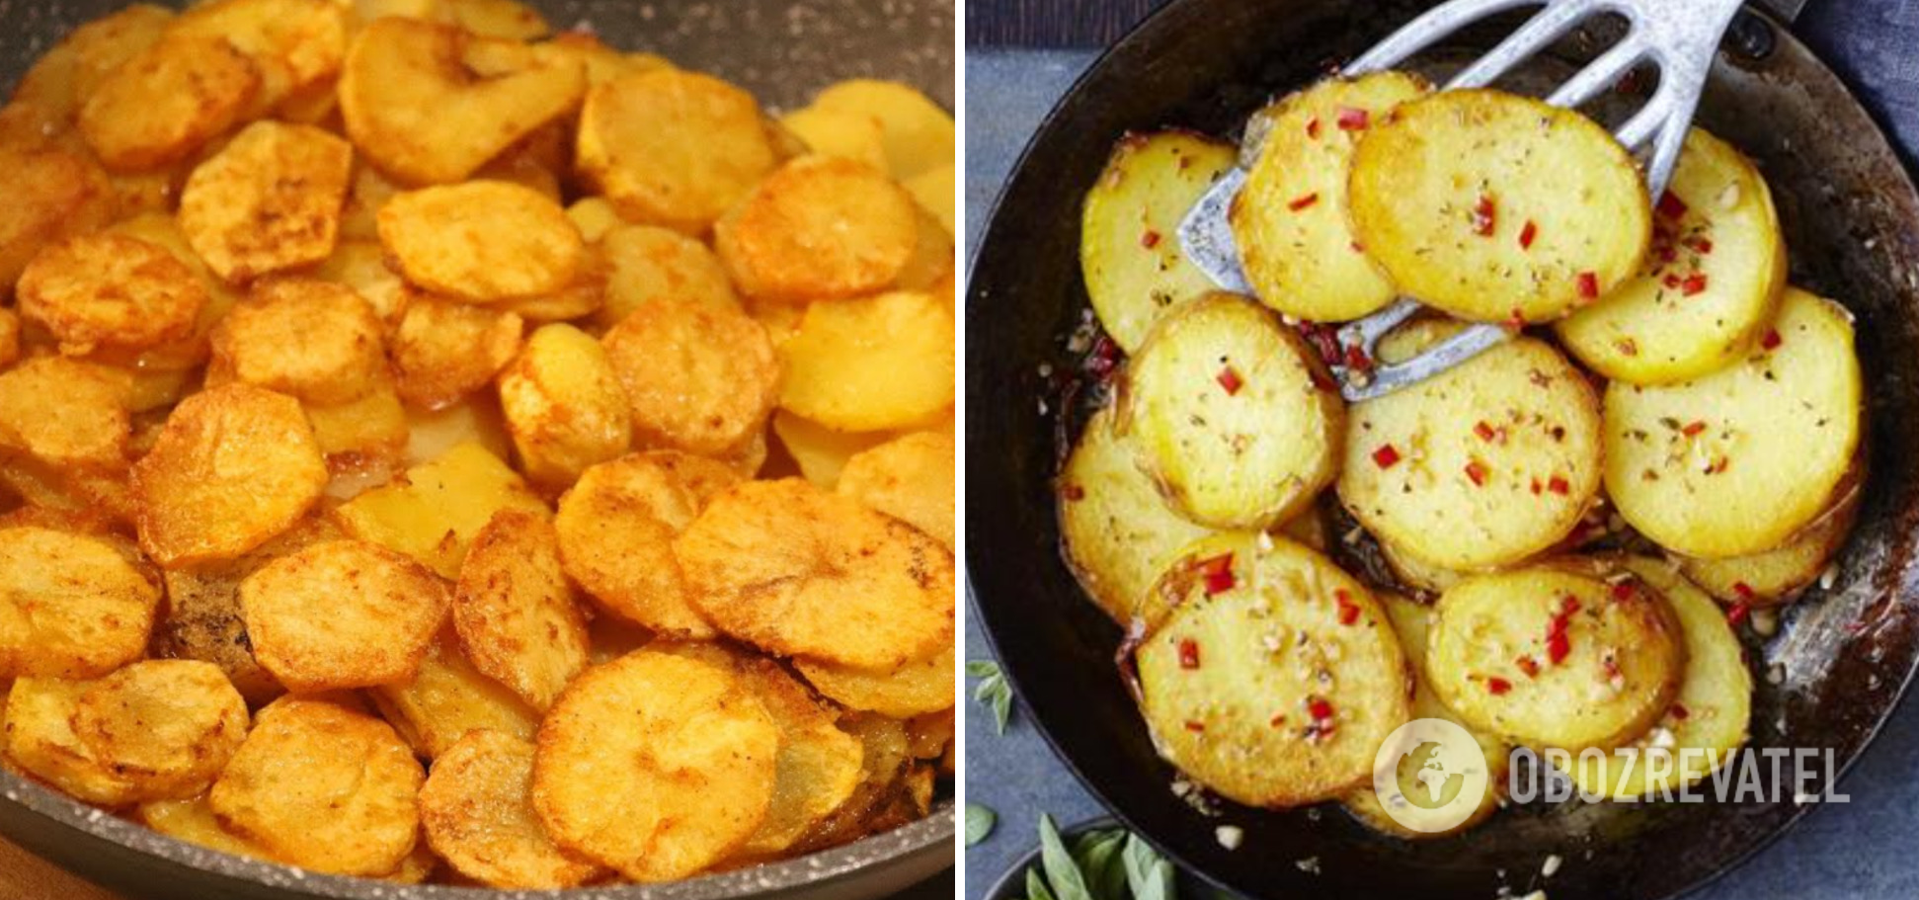 Crispy fried potatoes in circles